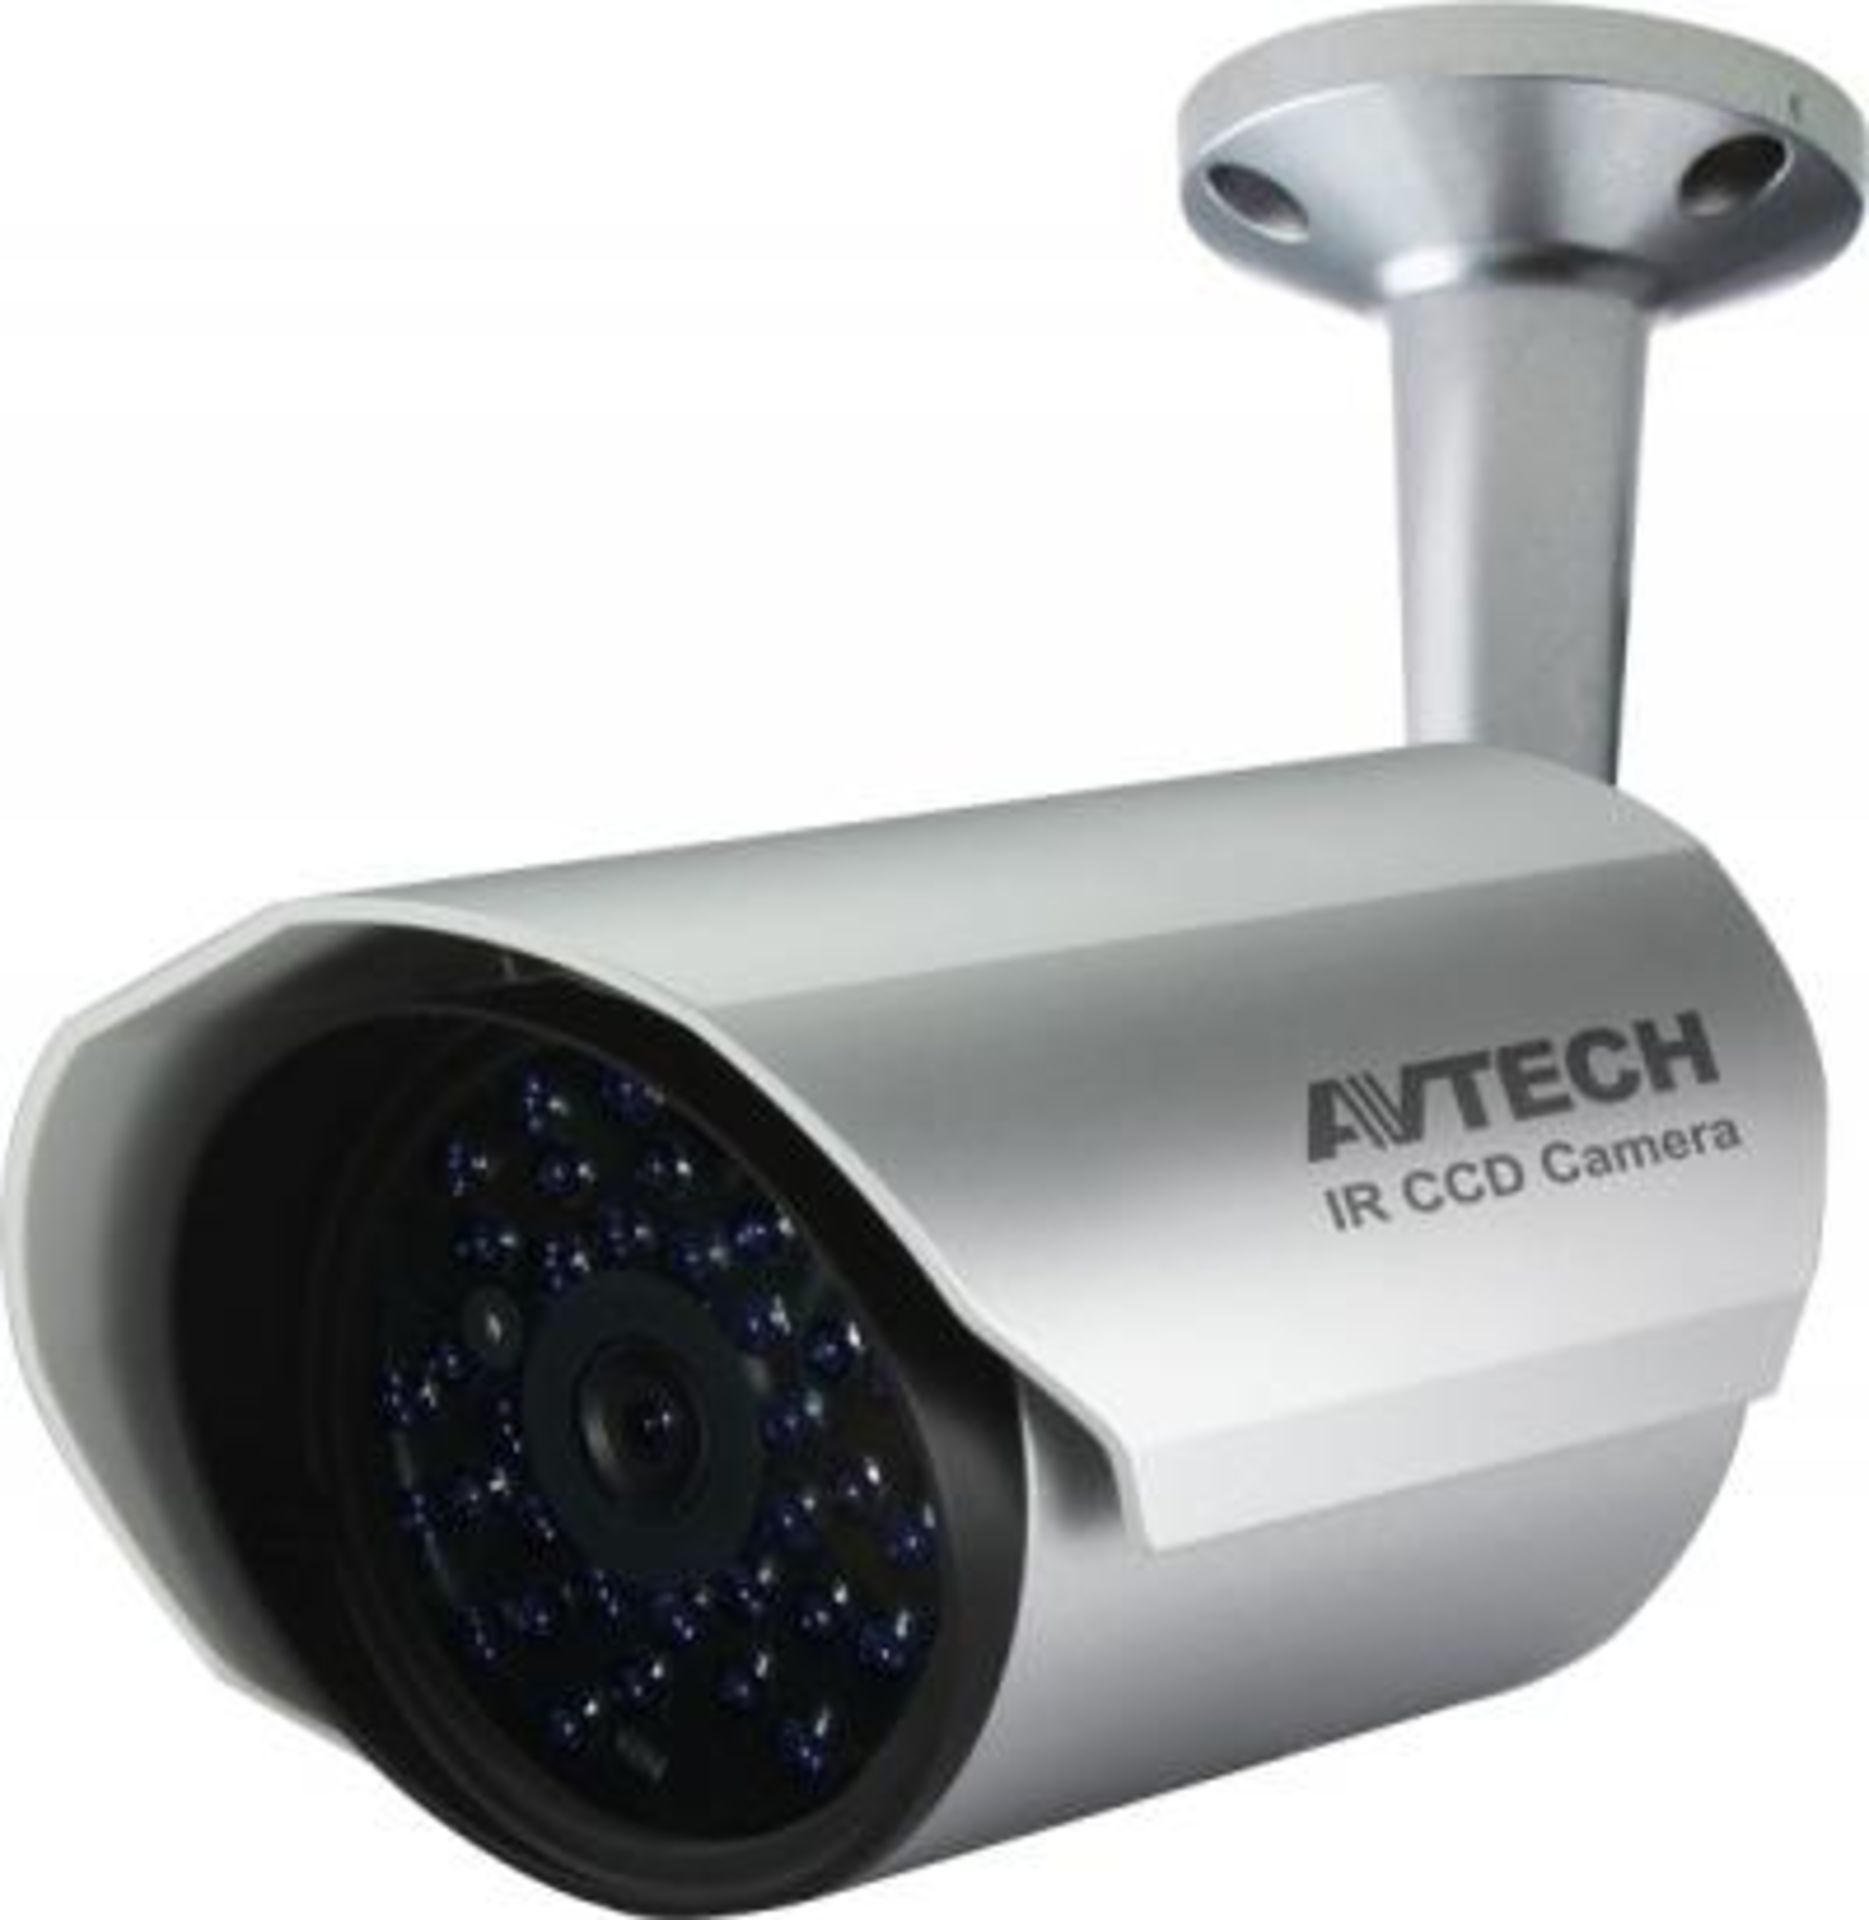 V Brand New Avtech Bullet Camera -1/3" Sony Super HAD CCD- 540TVL- 60 Degrees viewing angle -